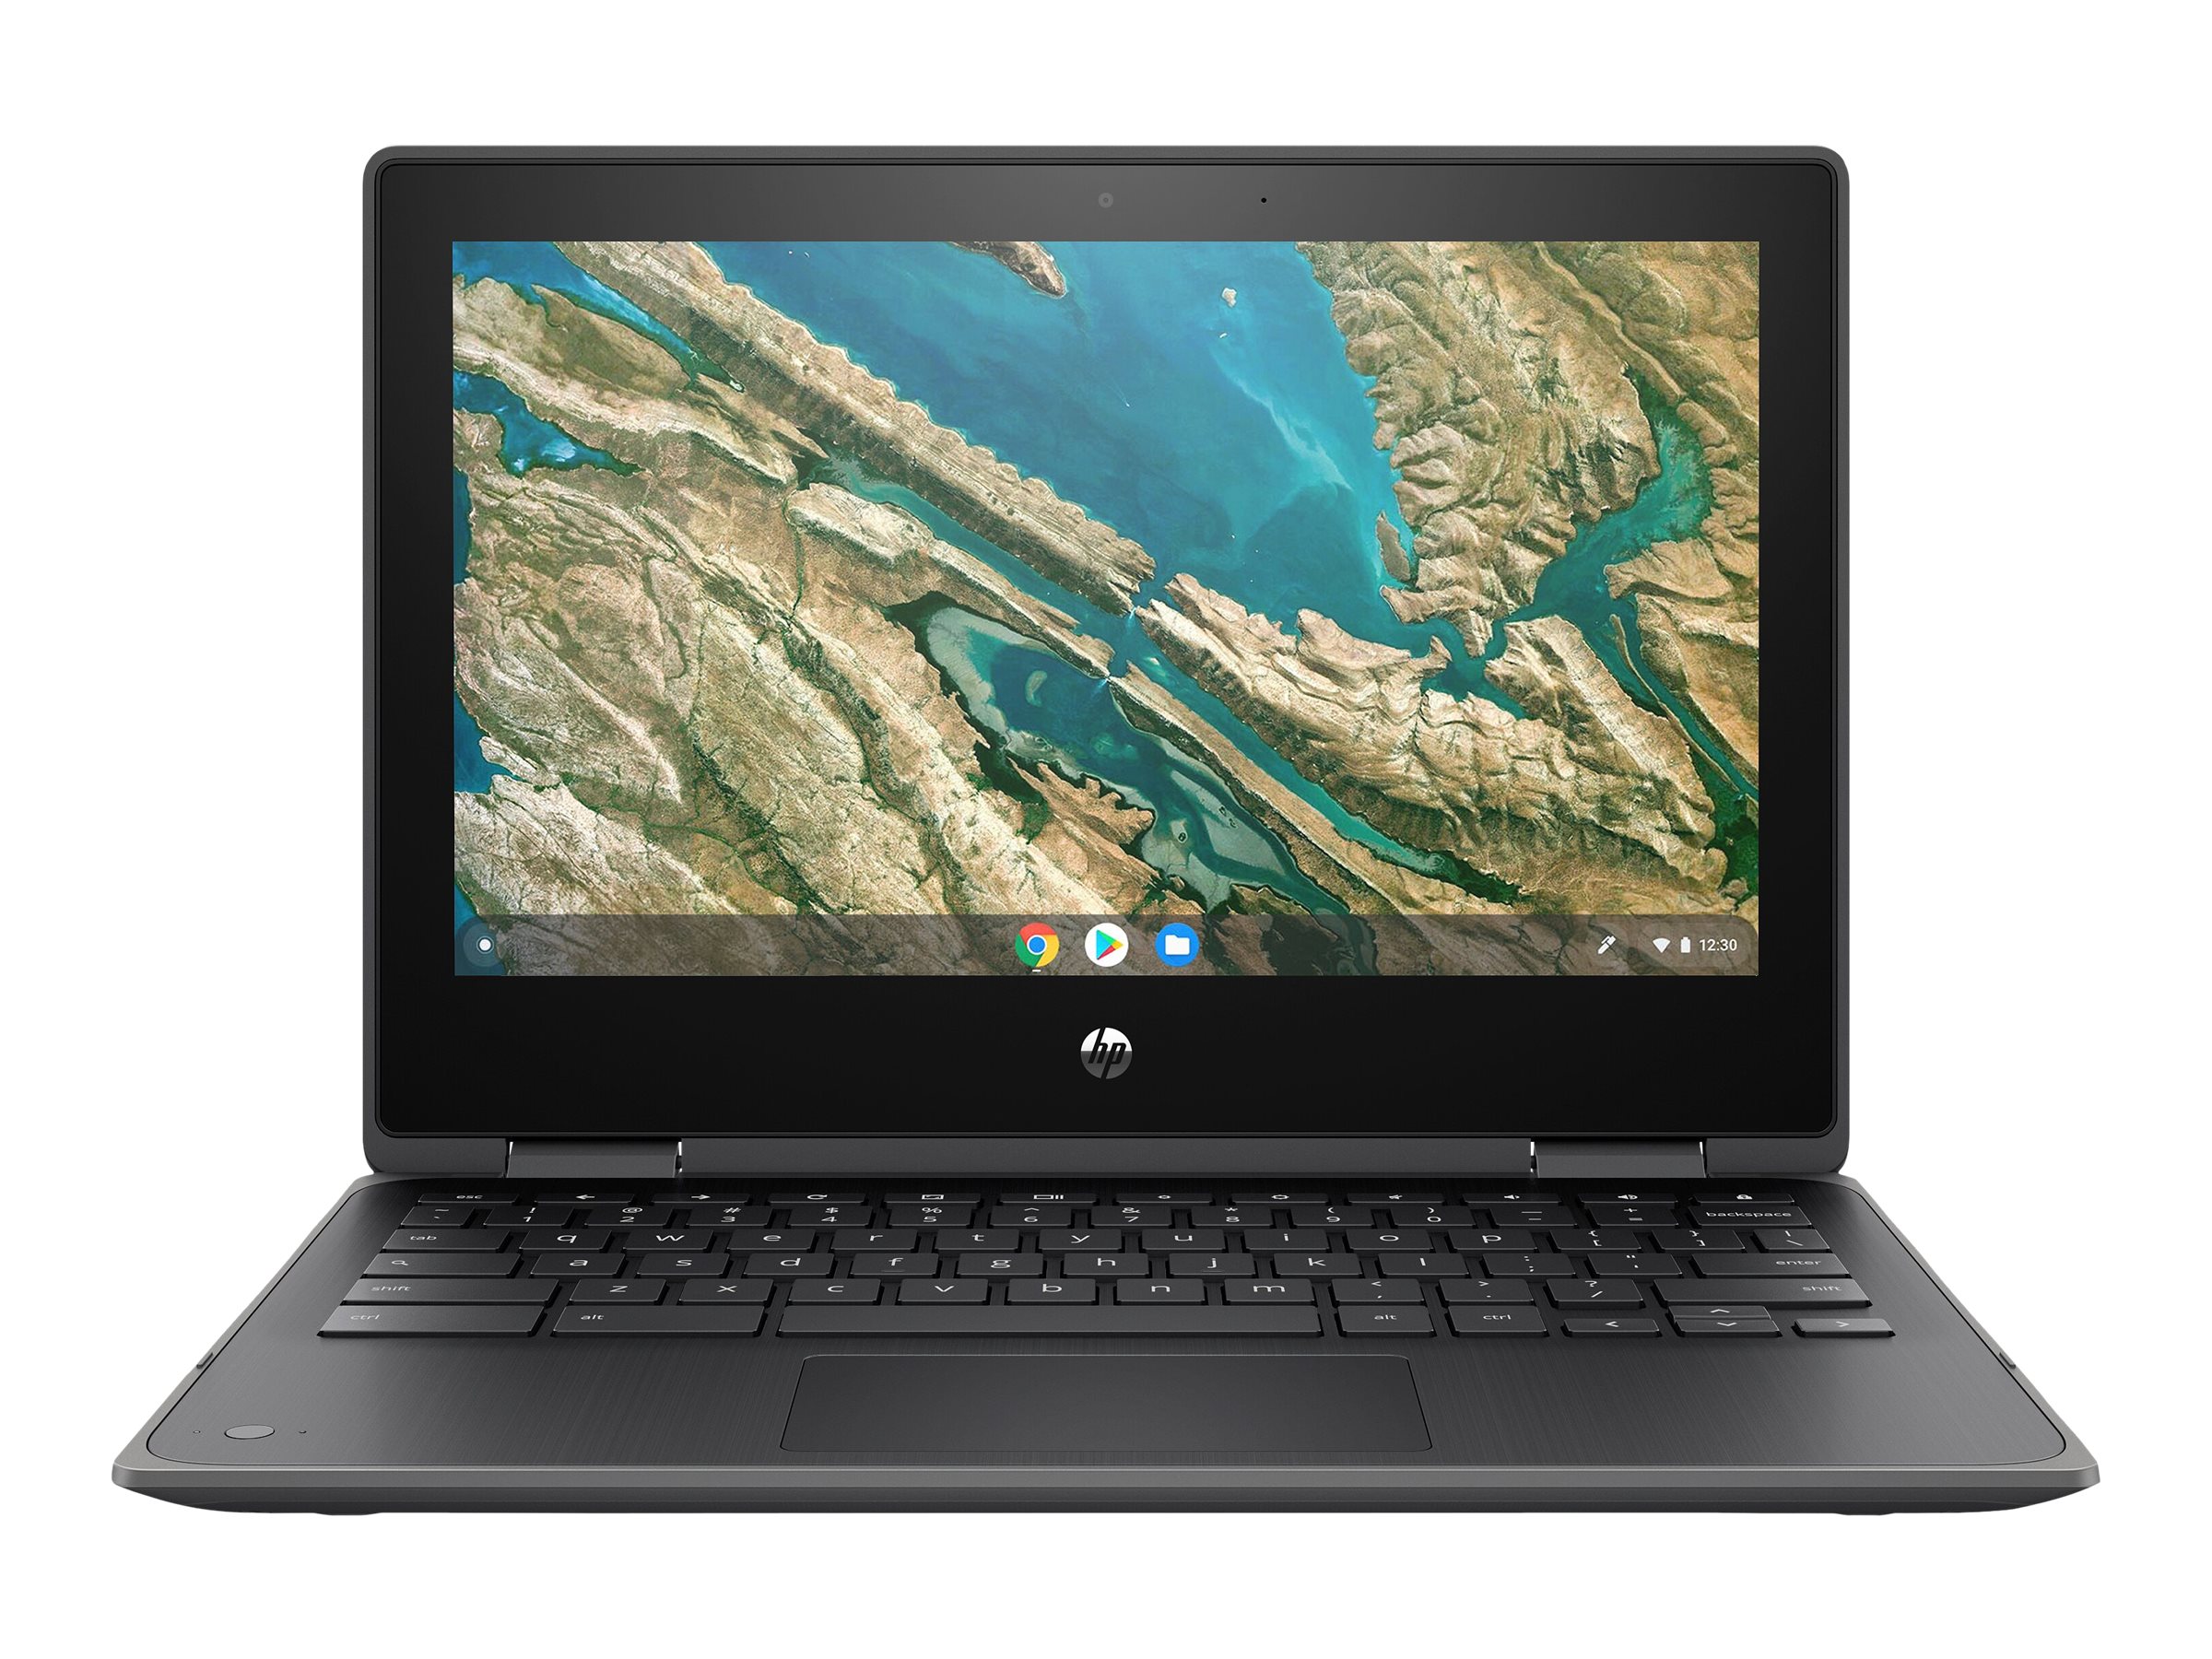 HP Chromebook x360 (11 G3 Education Edition)